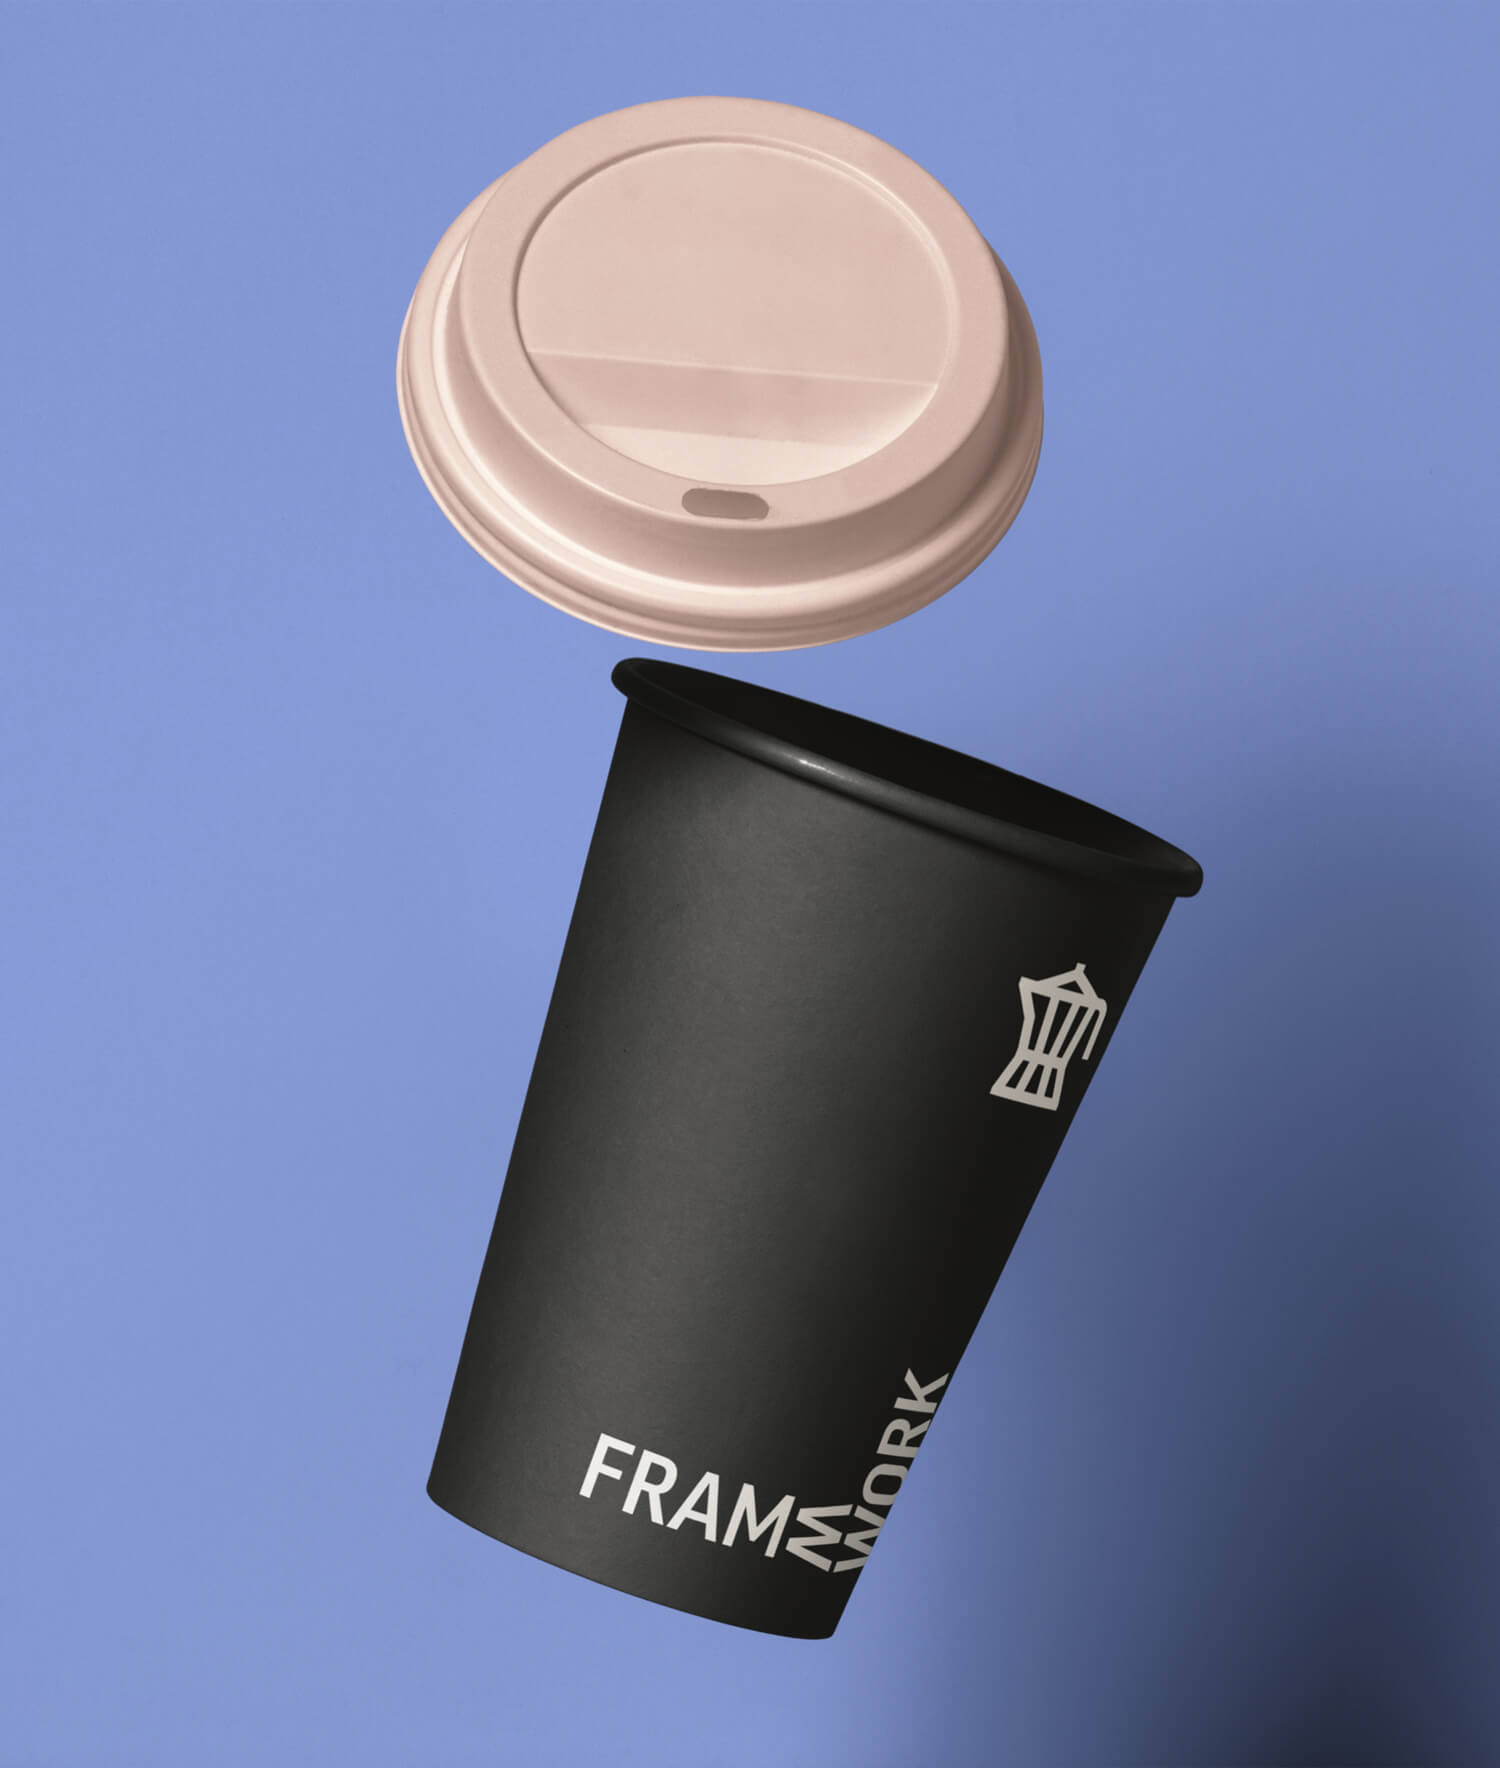 Framework branded coffee cup